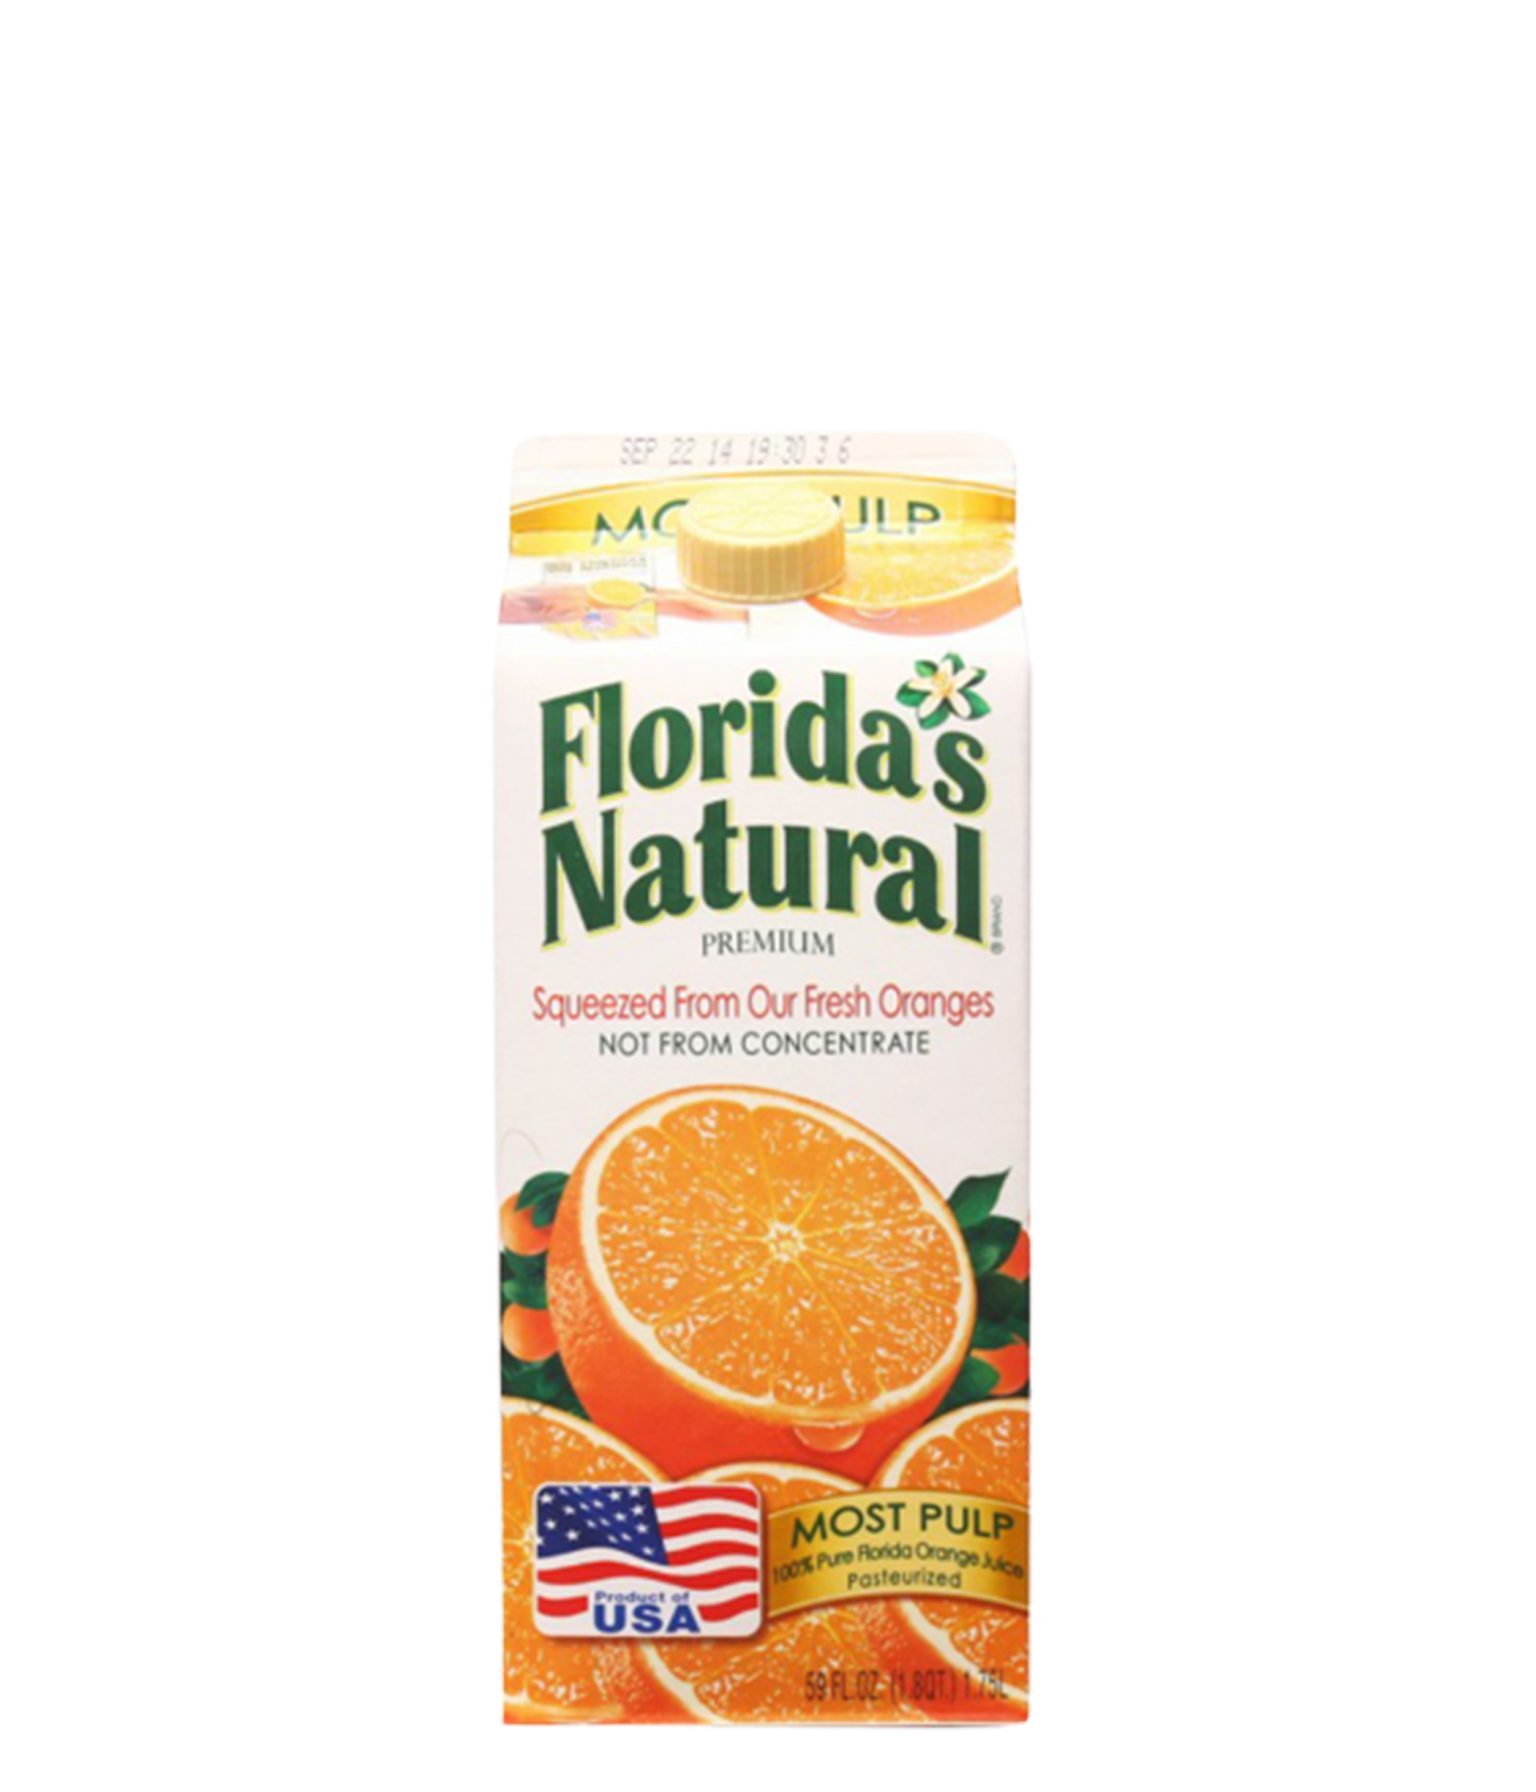 Florida Natural Grower Style Orange Juice (Most Pulp) 1.5 lt main image